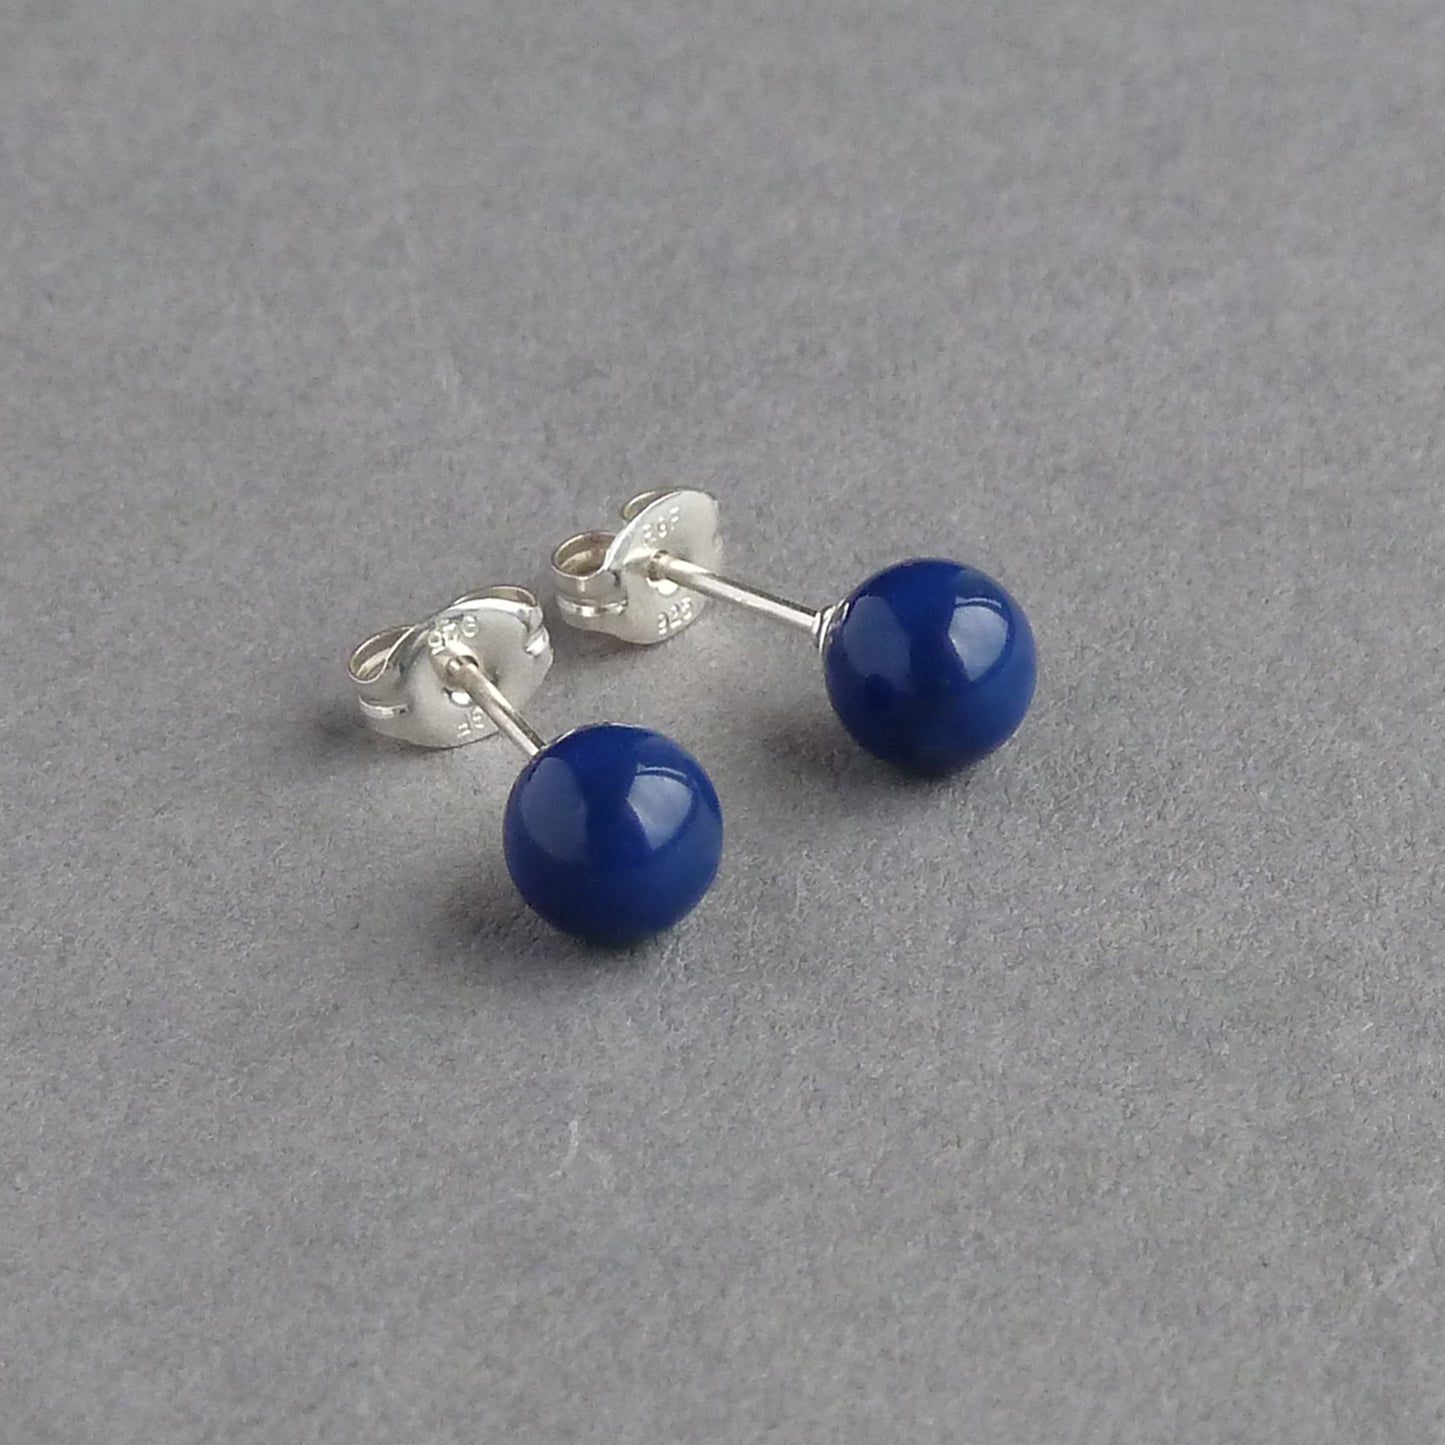 Small cobalt blue stud earrings